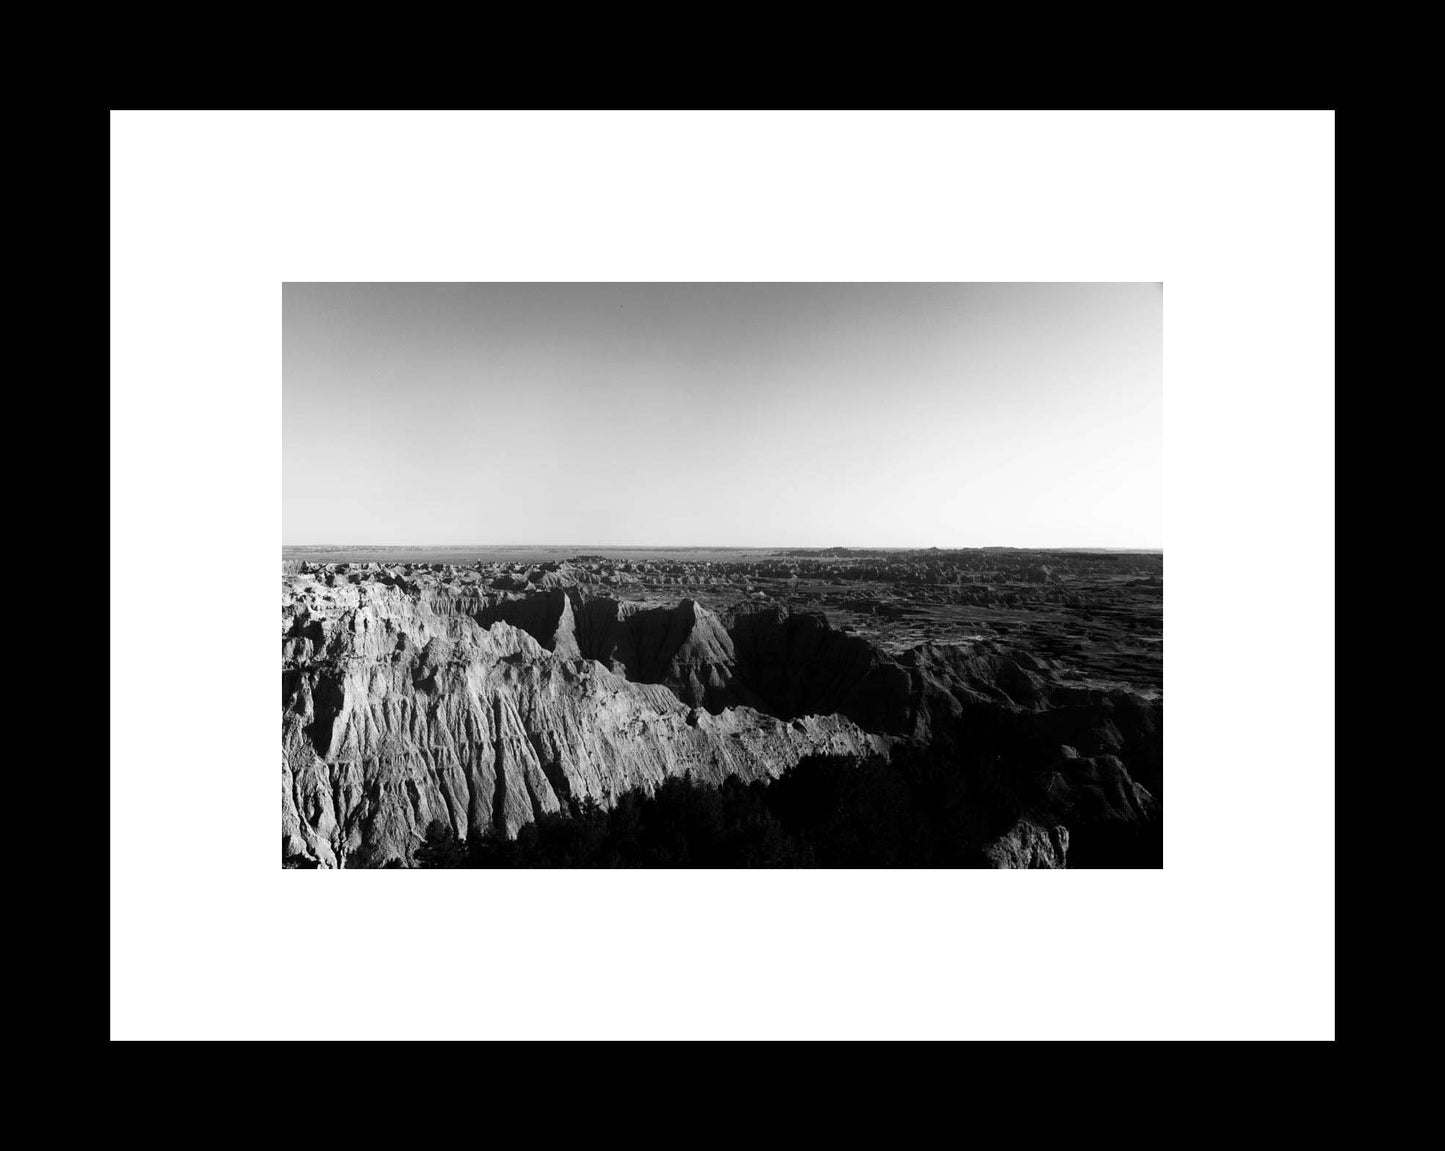 Black and White Badlands National Park Scenic Canyon Overlook, South Dakota Landscape Photography Print, Midwest Travel Photo Art, - eireanneilis